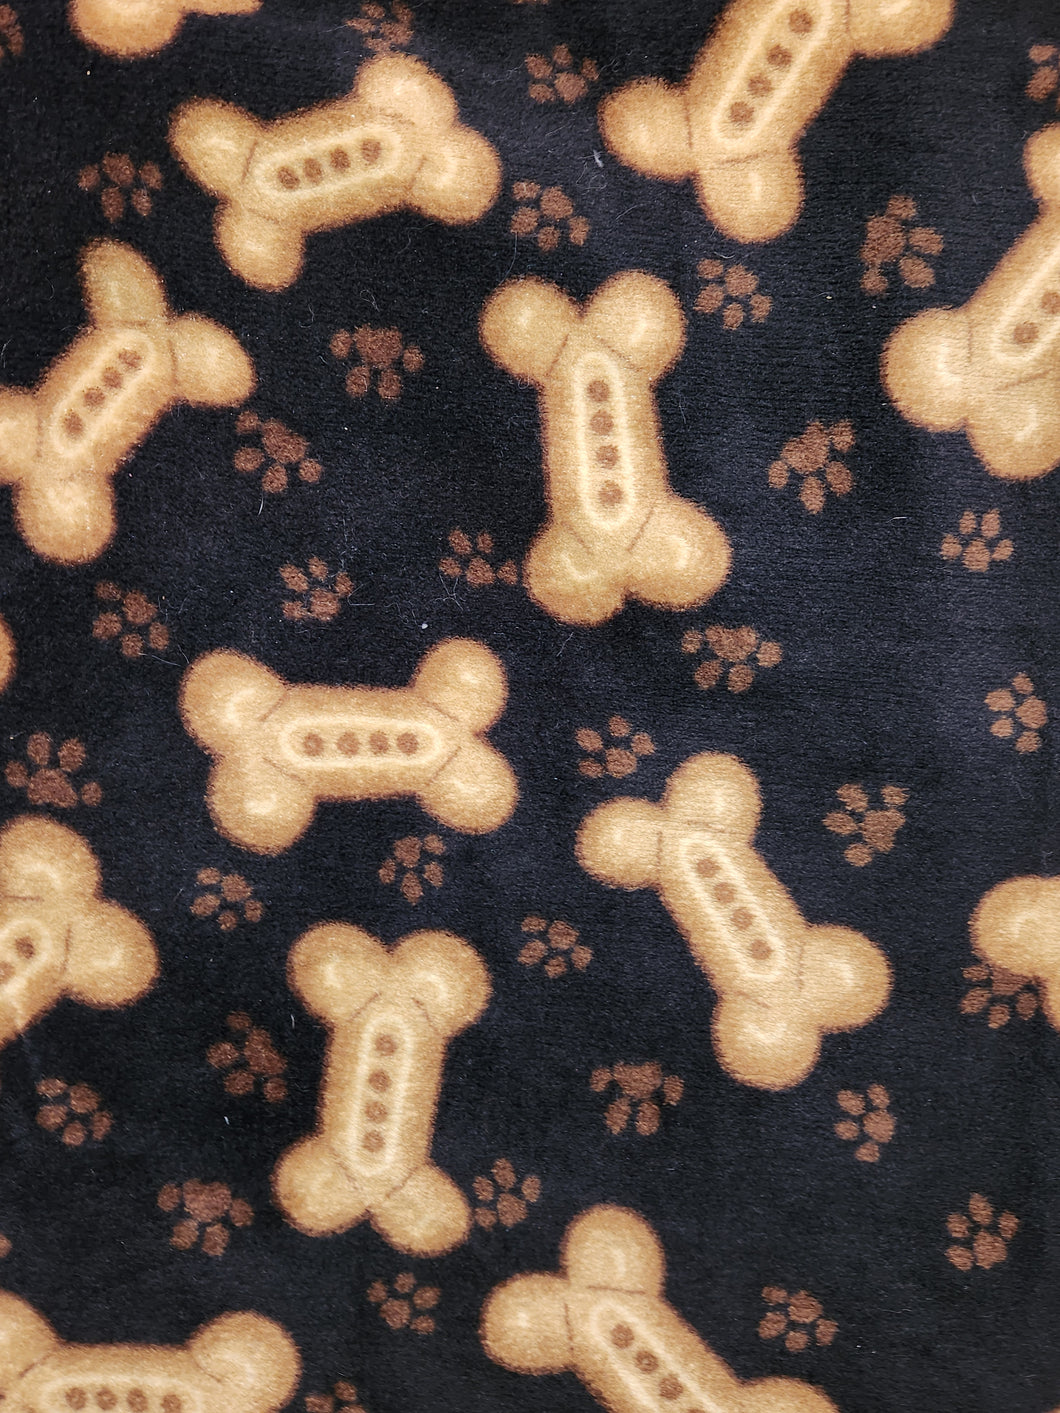 Throw Blanket - Dog Bones & Pawprints Brown on Black Ultra Cuddle